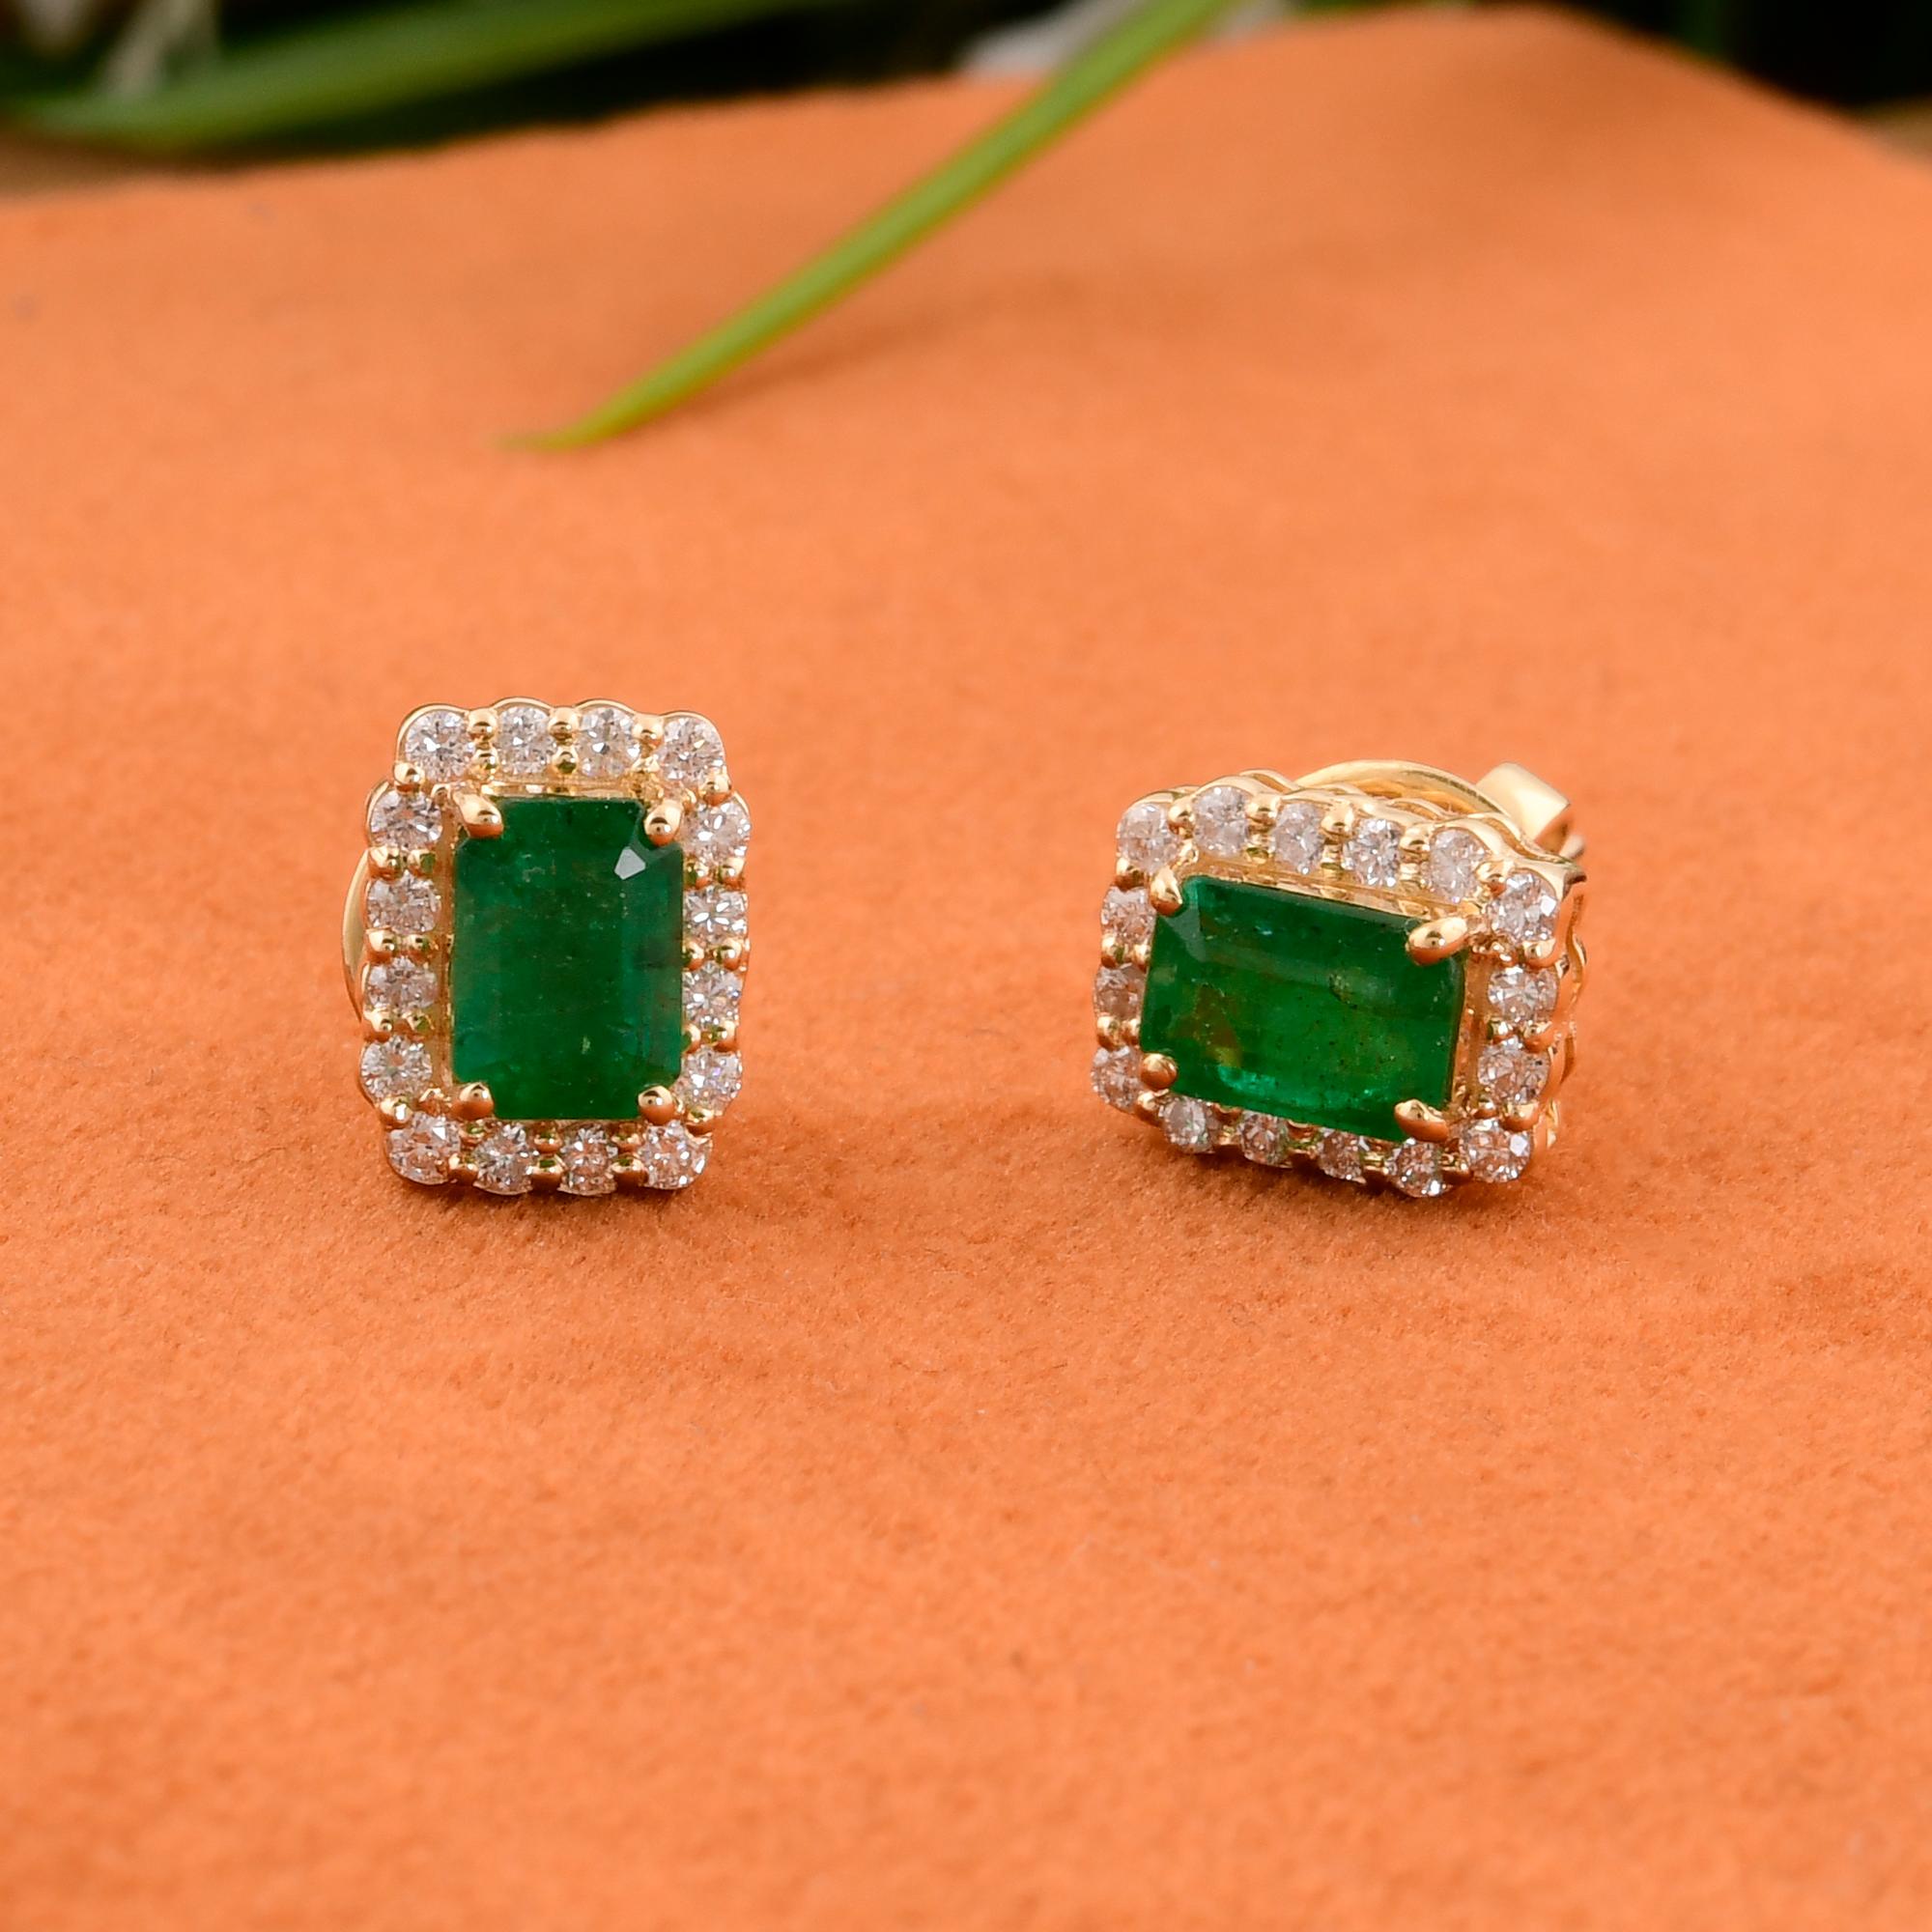 Modern Natural Zambian Emerald Stud Earrings Diamond 18 Karat White Gold Jewelry For Sale